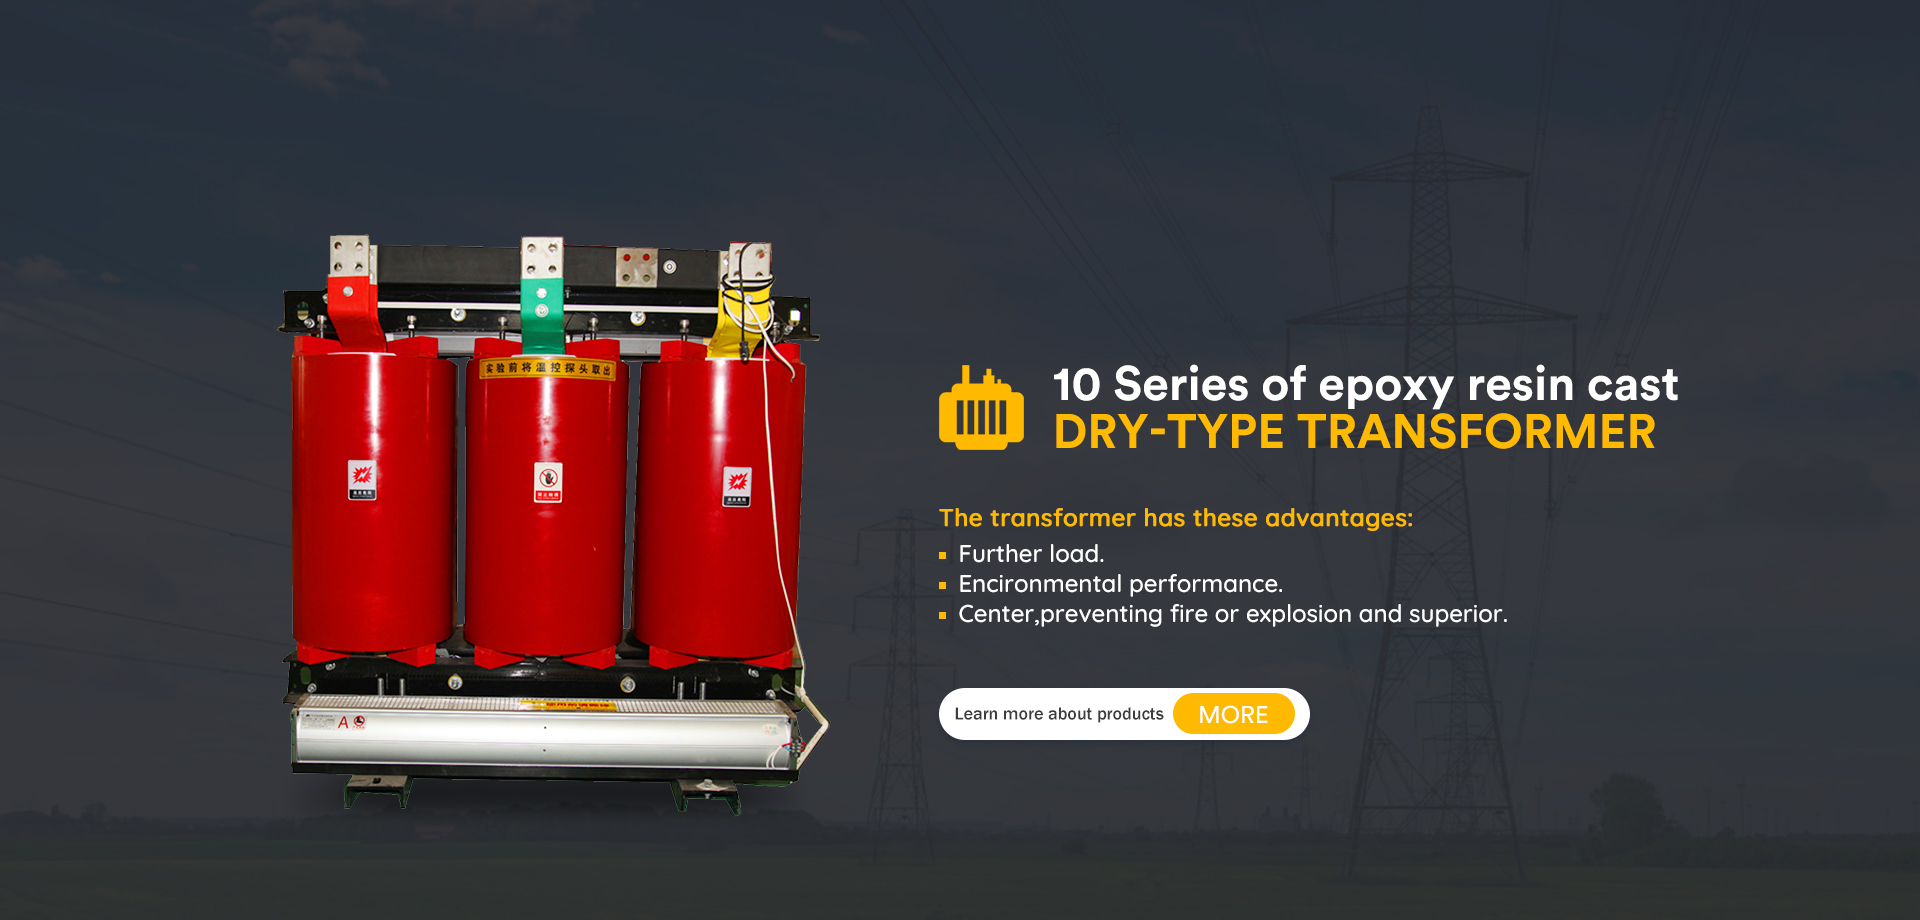 Dry Type Transformer